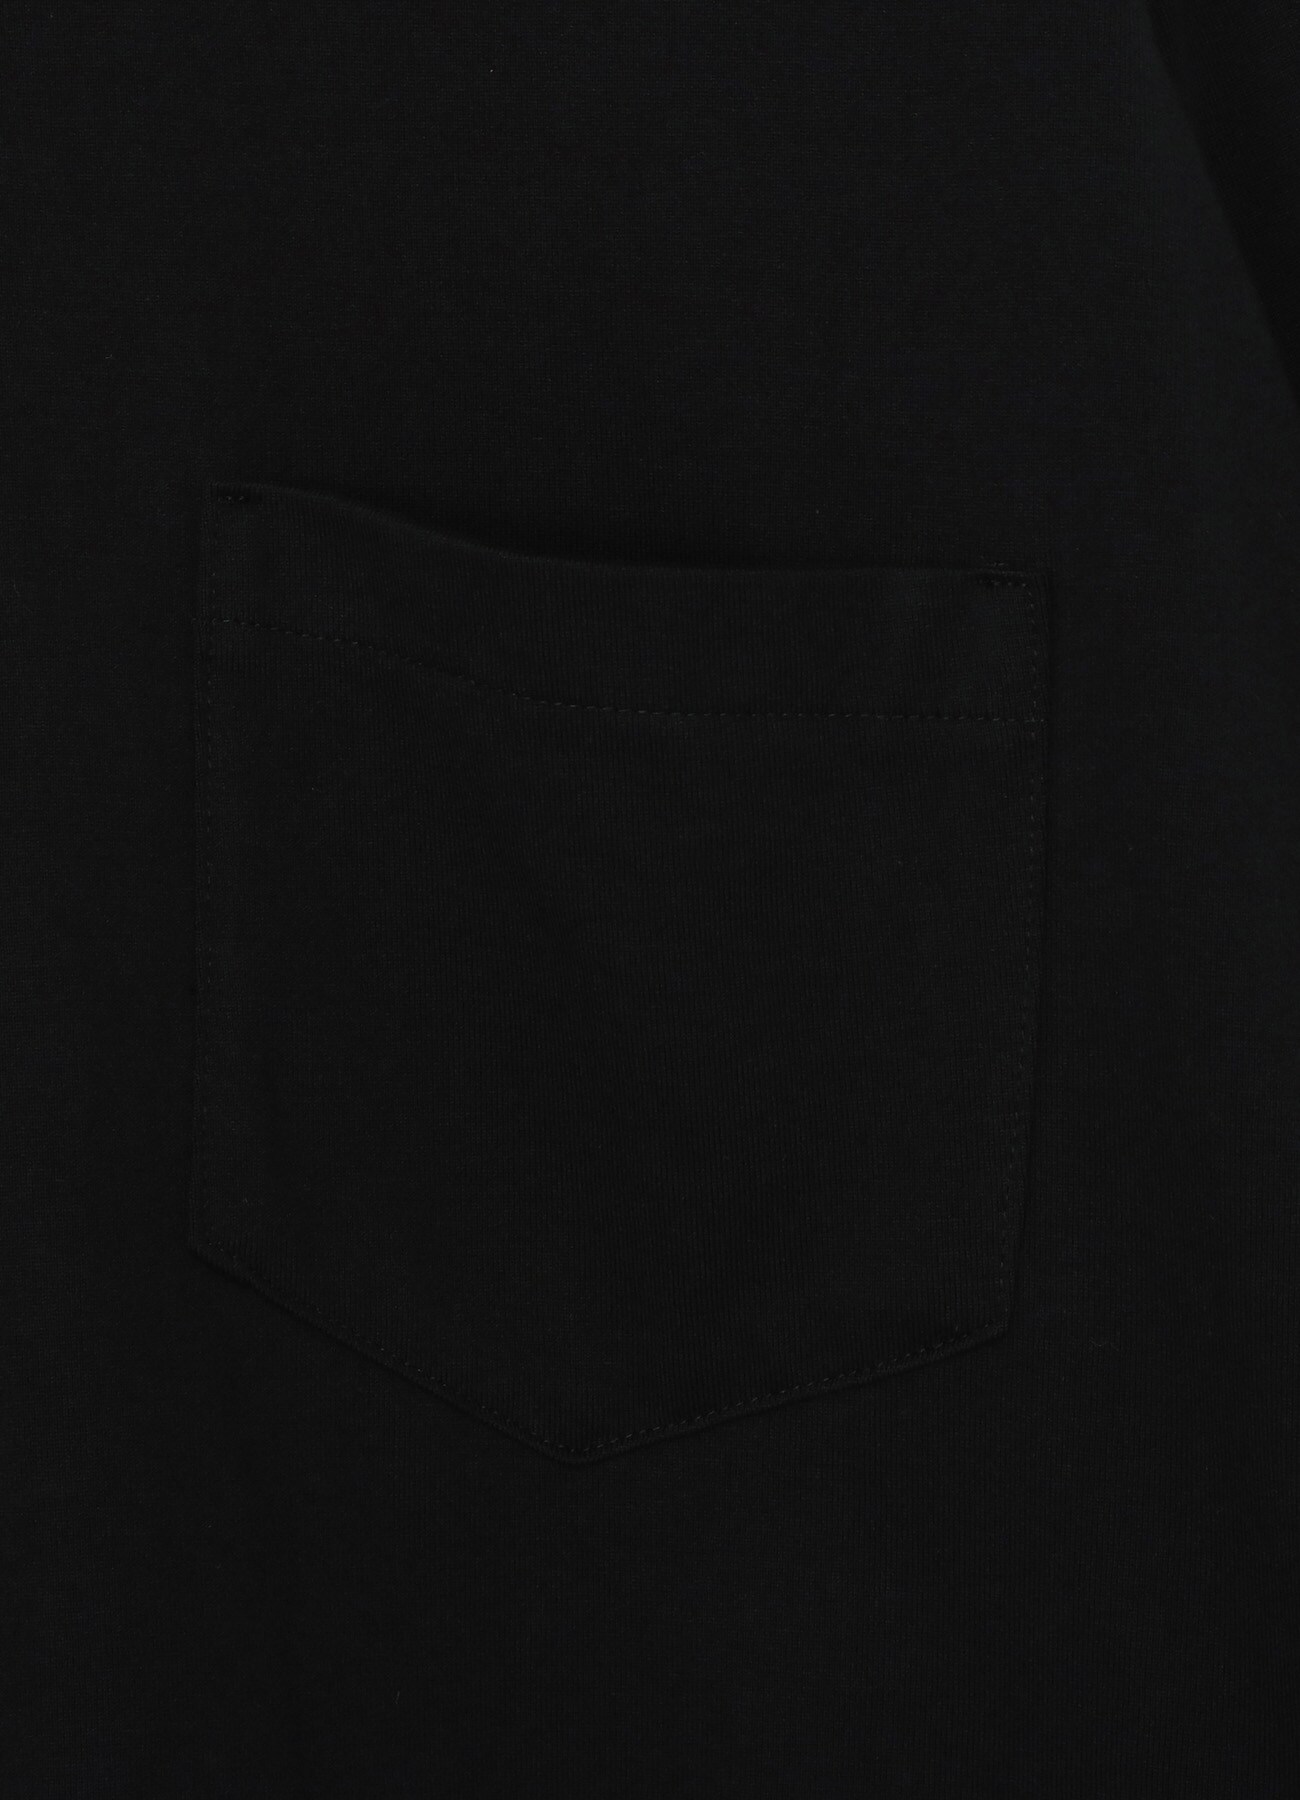 40/2 Cotton Plain Stitch+100/2 Broad Combination Shirt Dress A